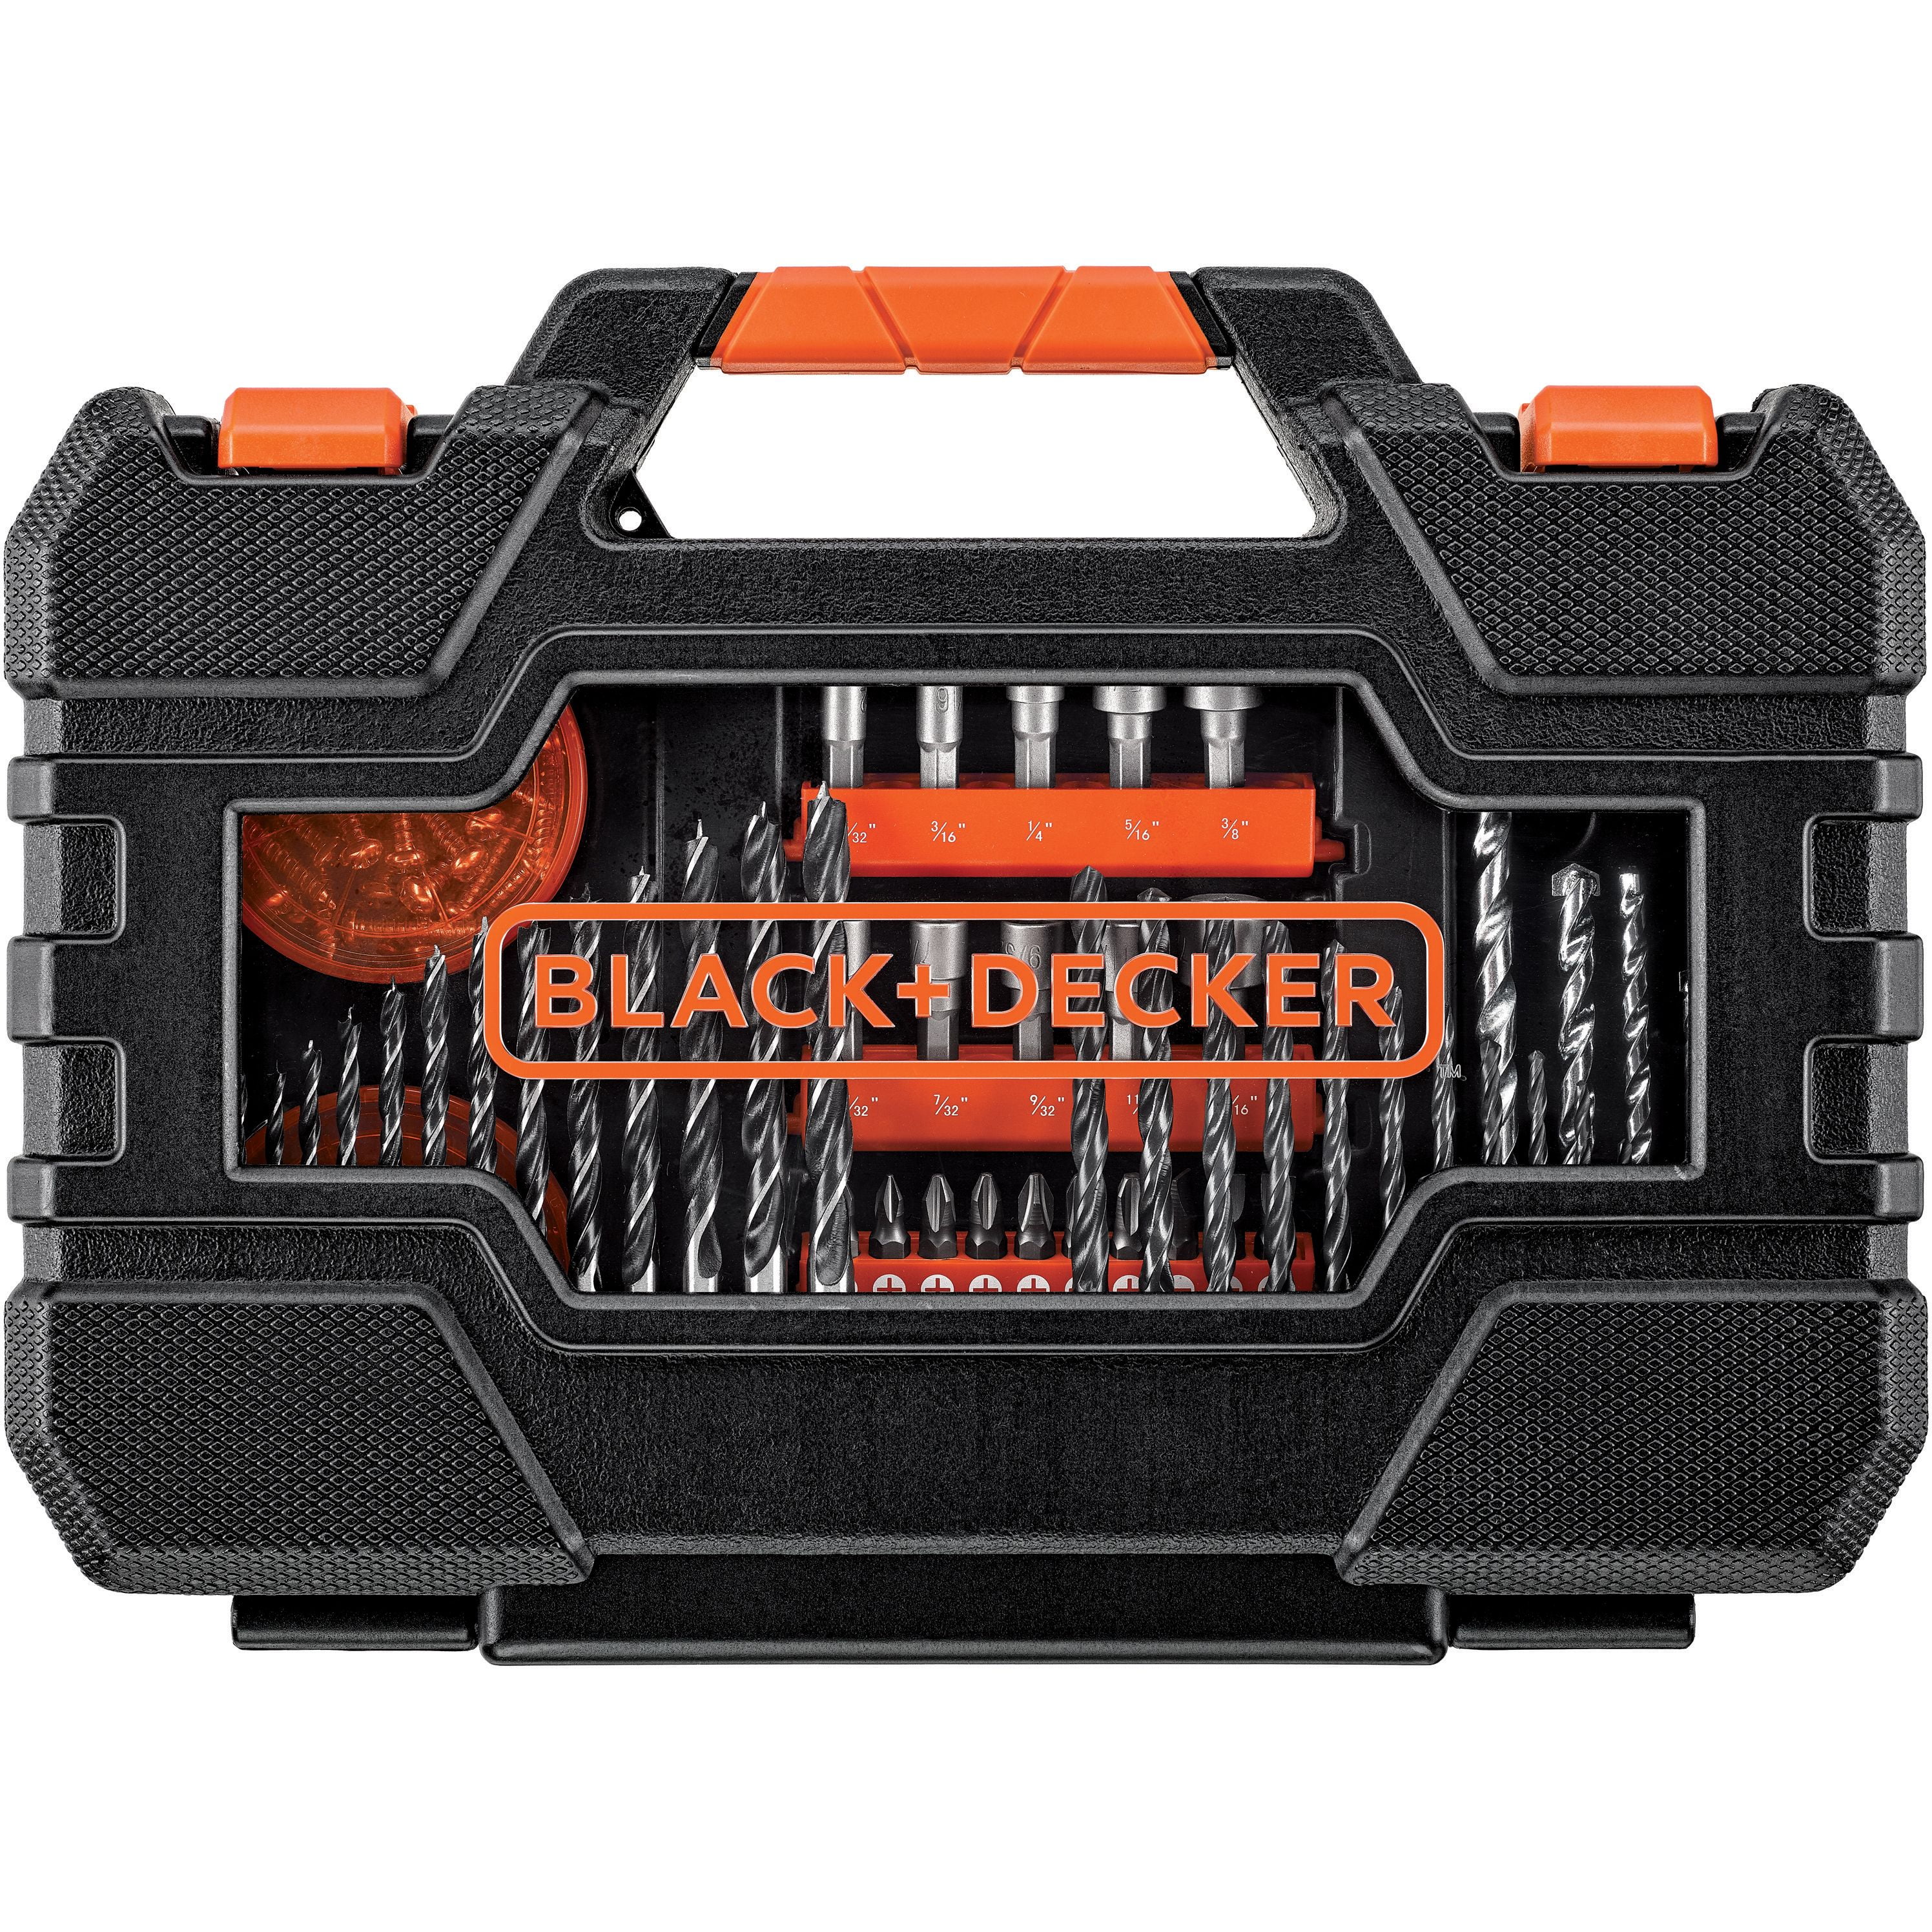 Black+Decker Drill Bits Set for Sale in Port St. Lucie, FL - OfferUp